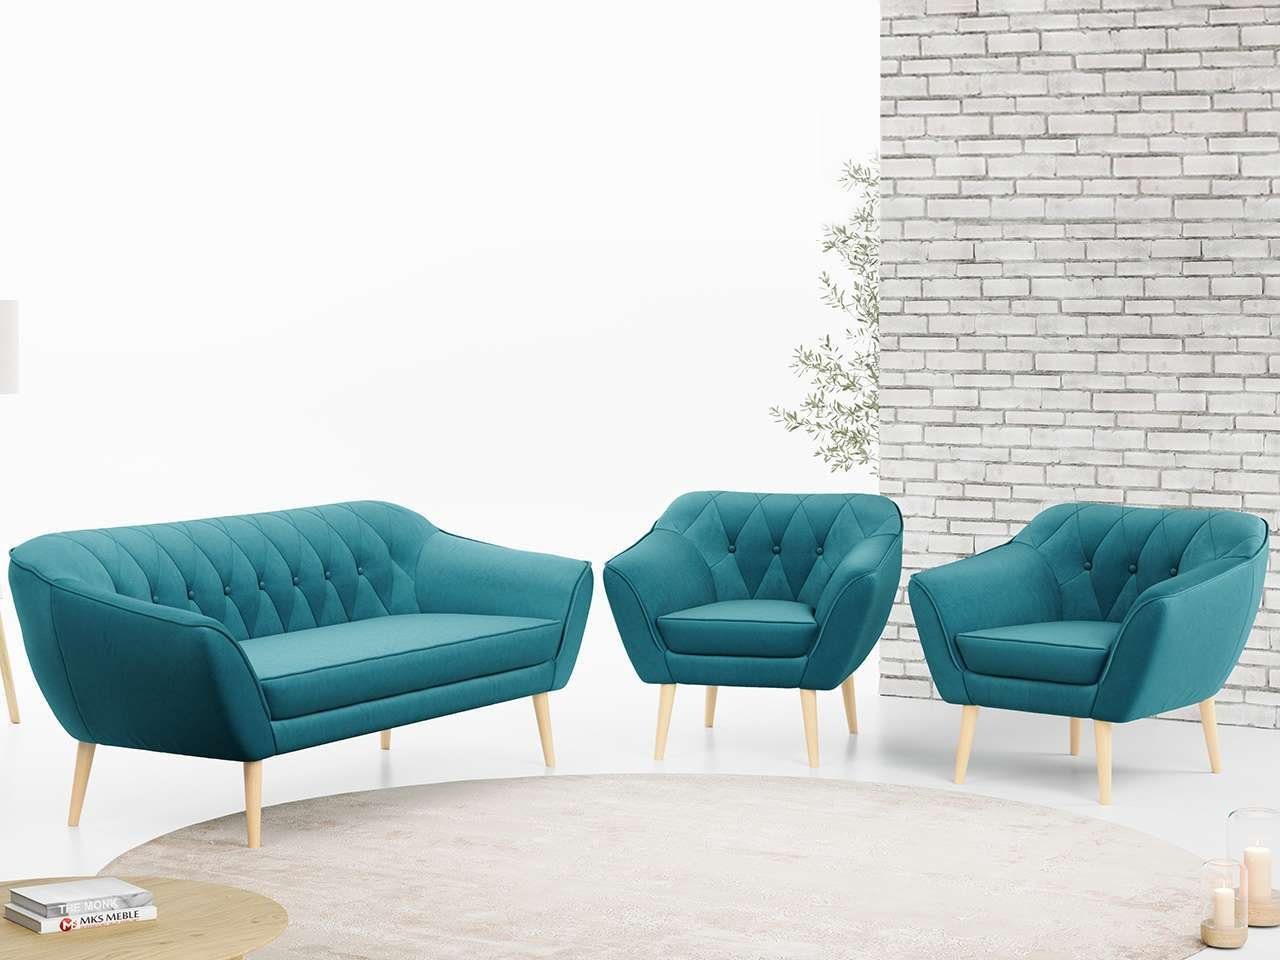 MKS MÖBEL Sofa PIRS 3 1 1, mit Relaxfunktion, Moderne Sofa Set, Skandinavische Deko Türkis Casablanca